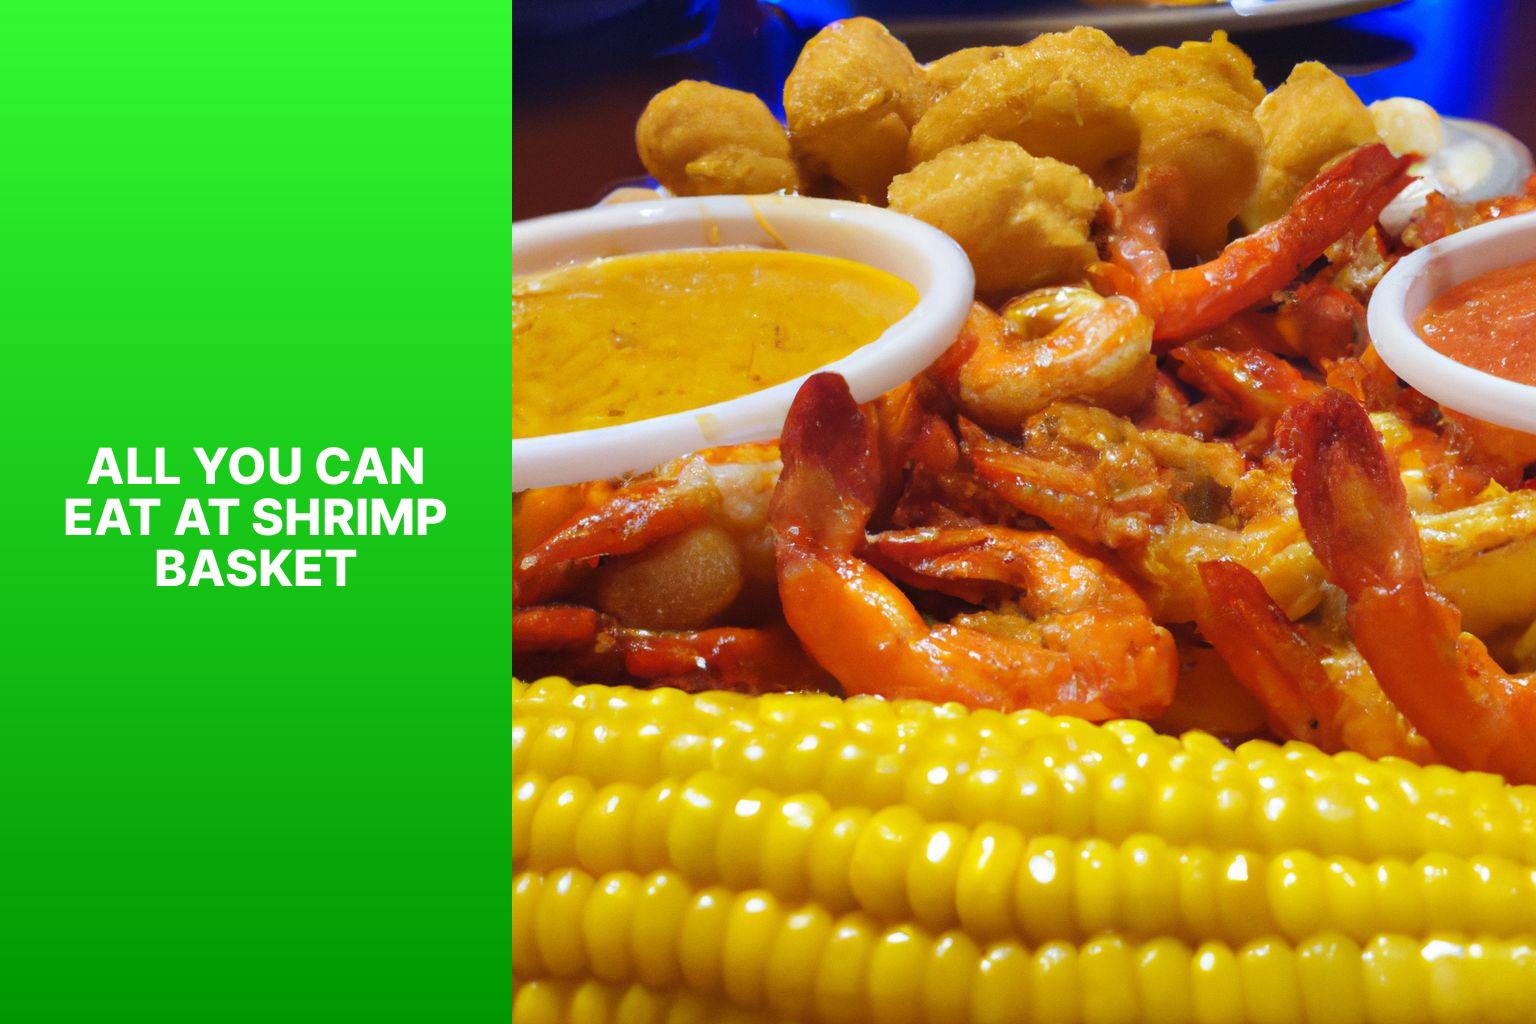 All You Can Eat At Shrimp Basket